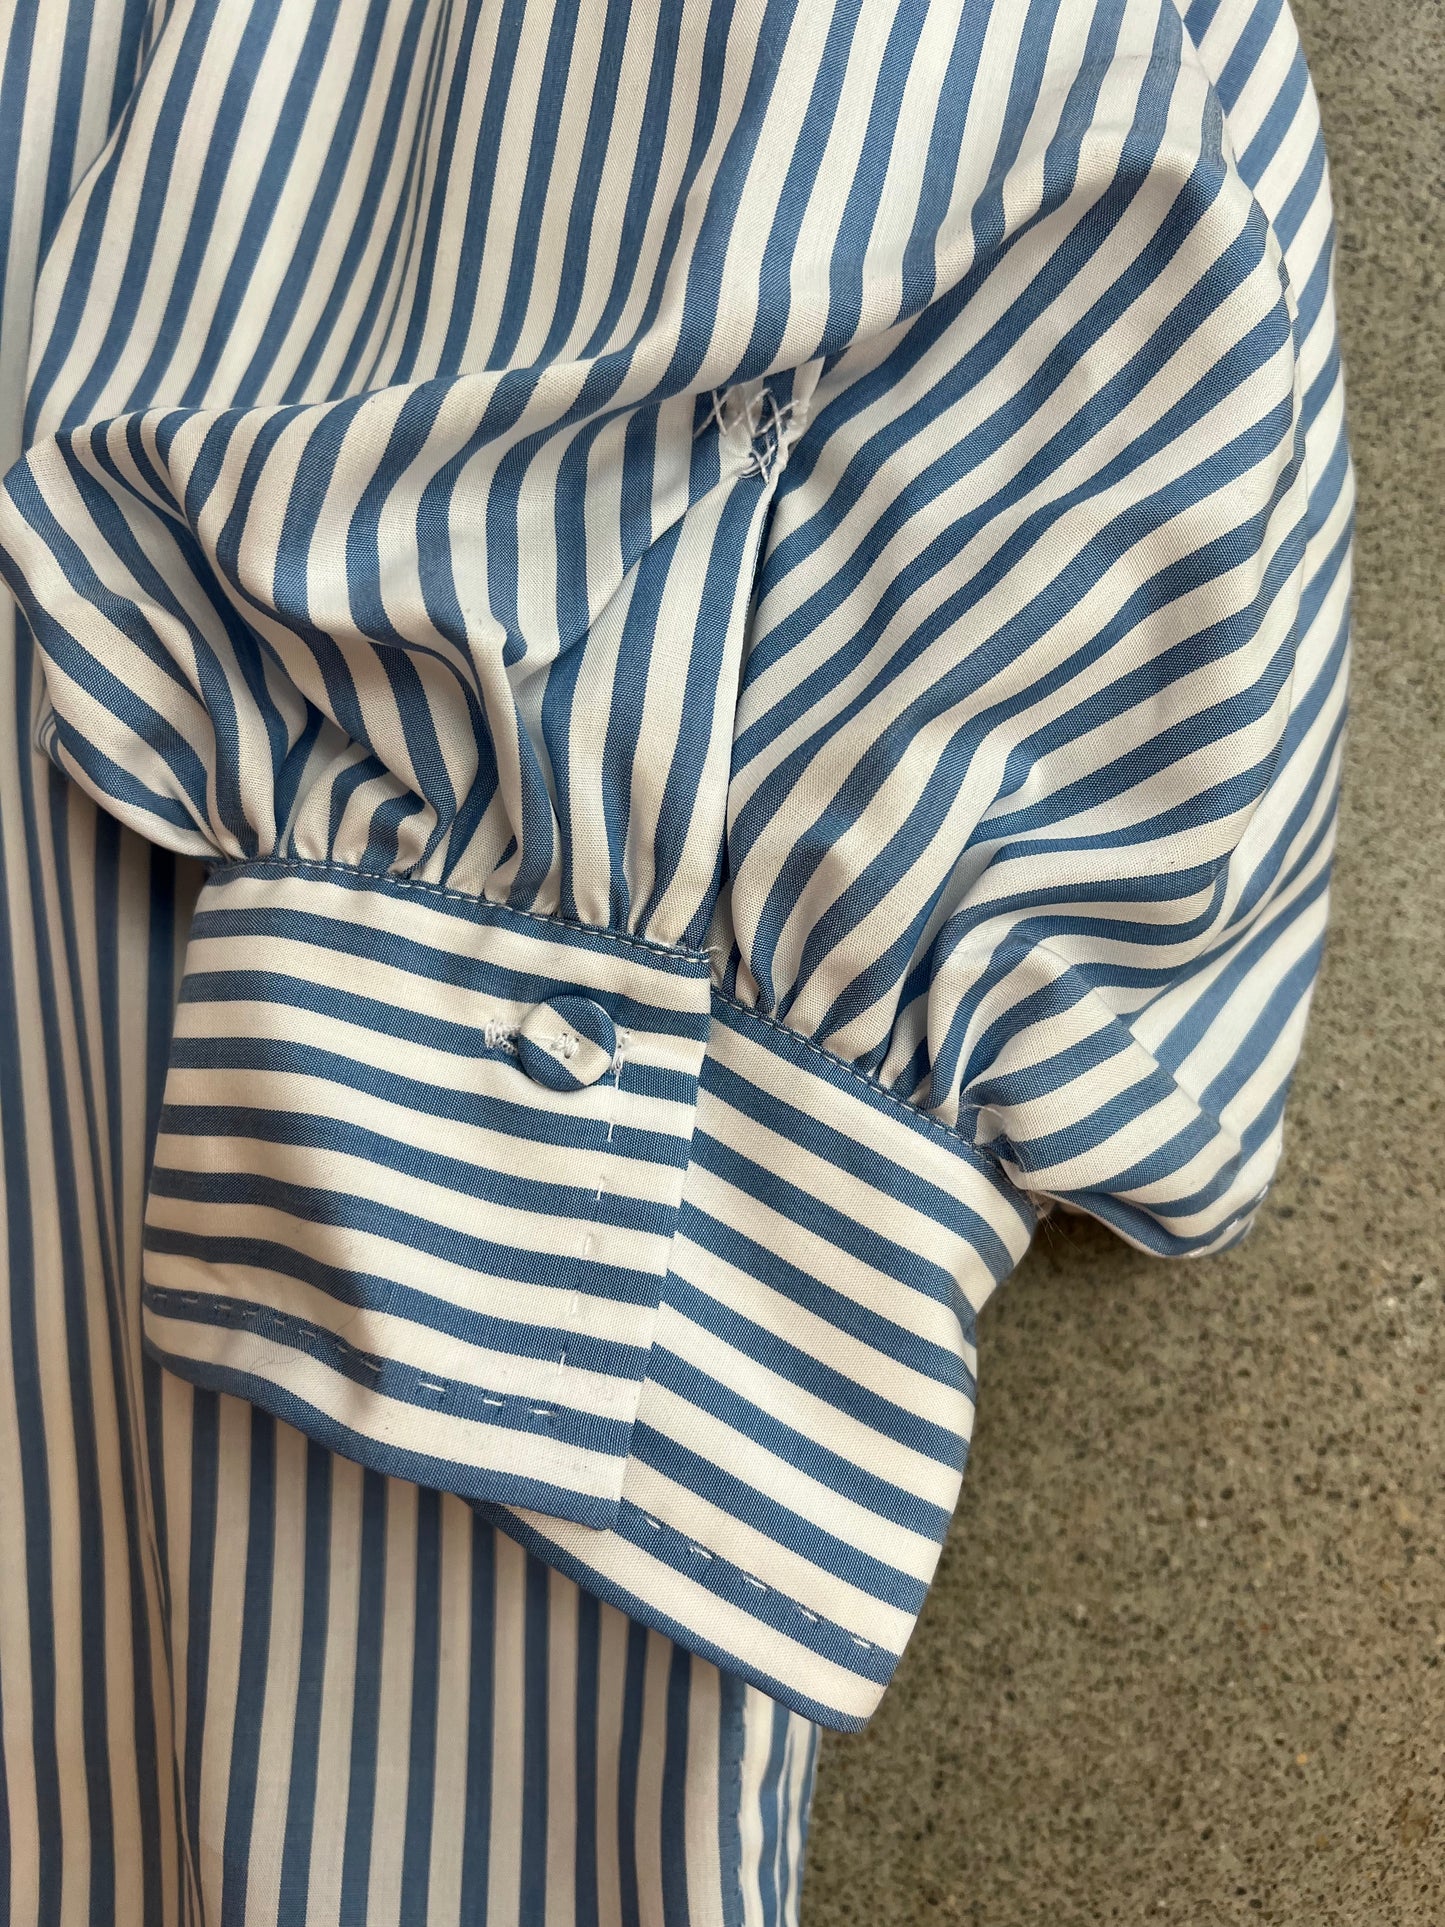 Le Sarte Pettegole - Wide-Sleeve Blouse in Blue and White stripe